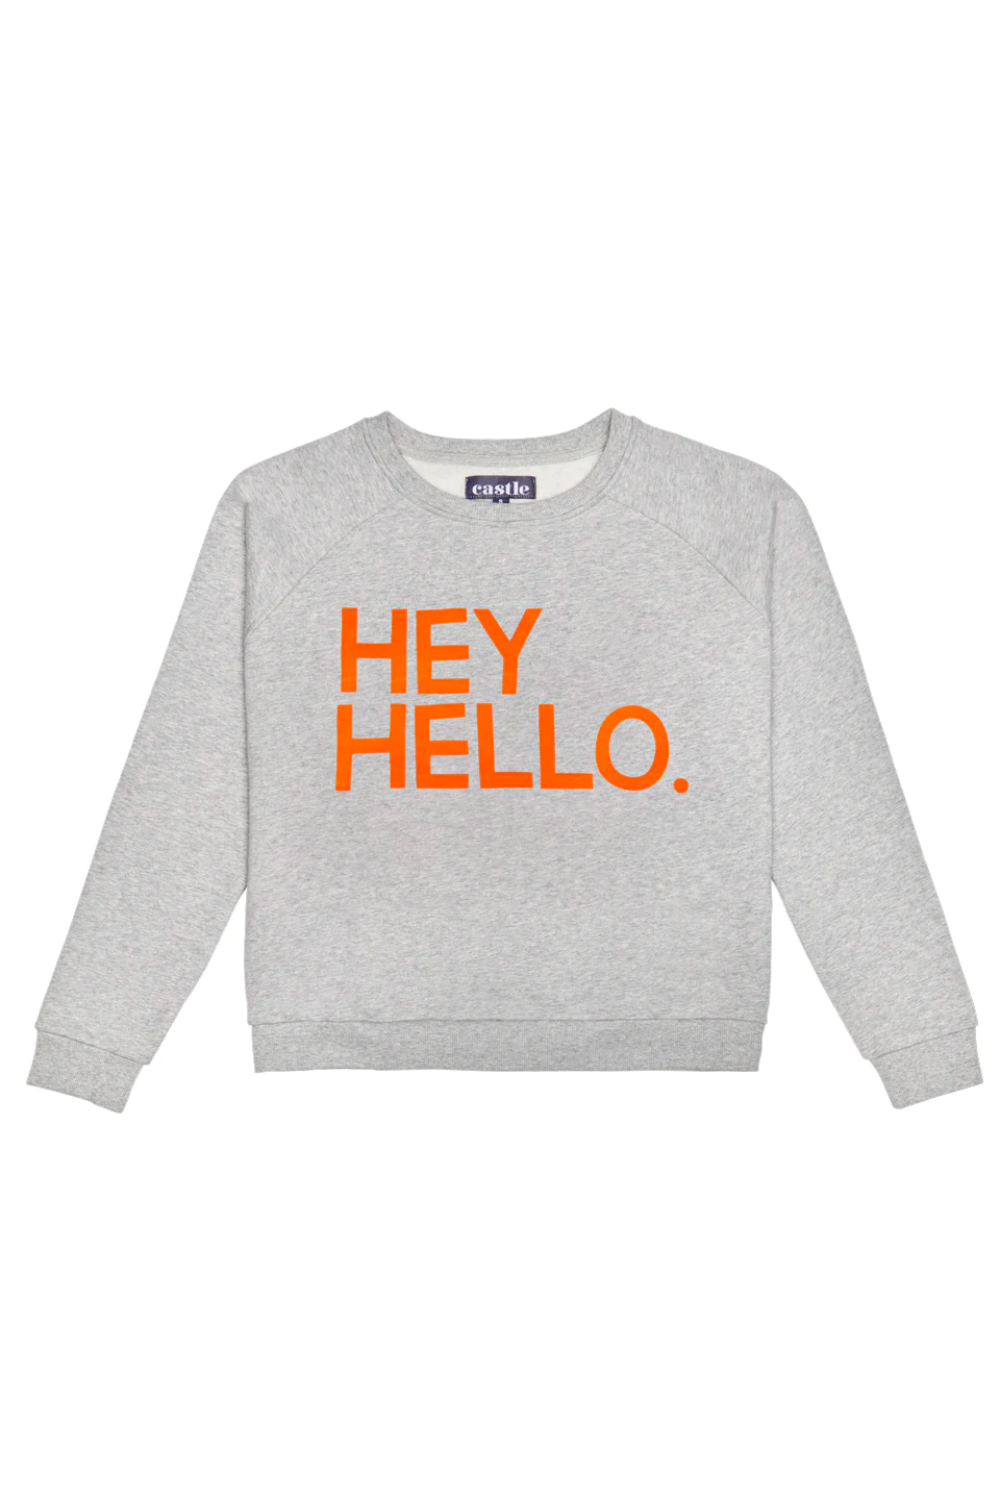 Hey Hello sweater